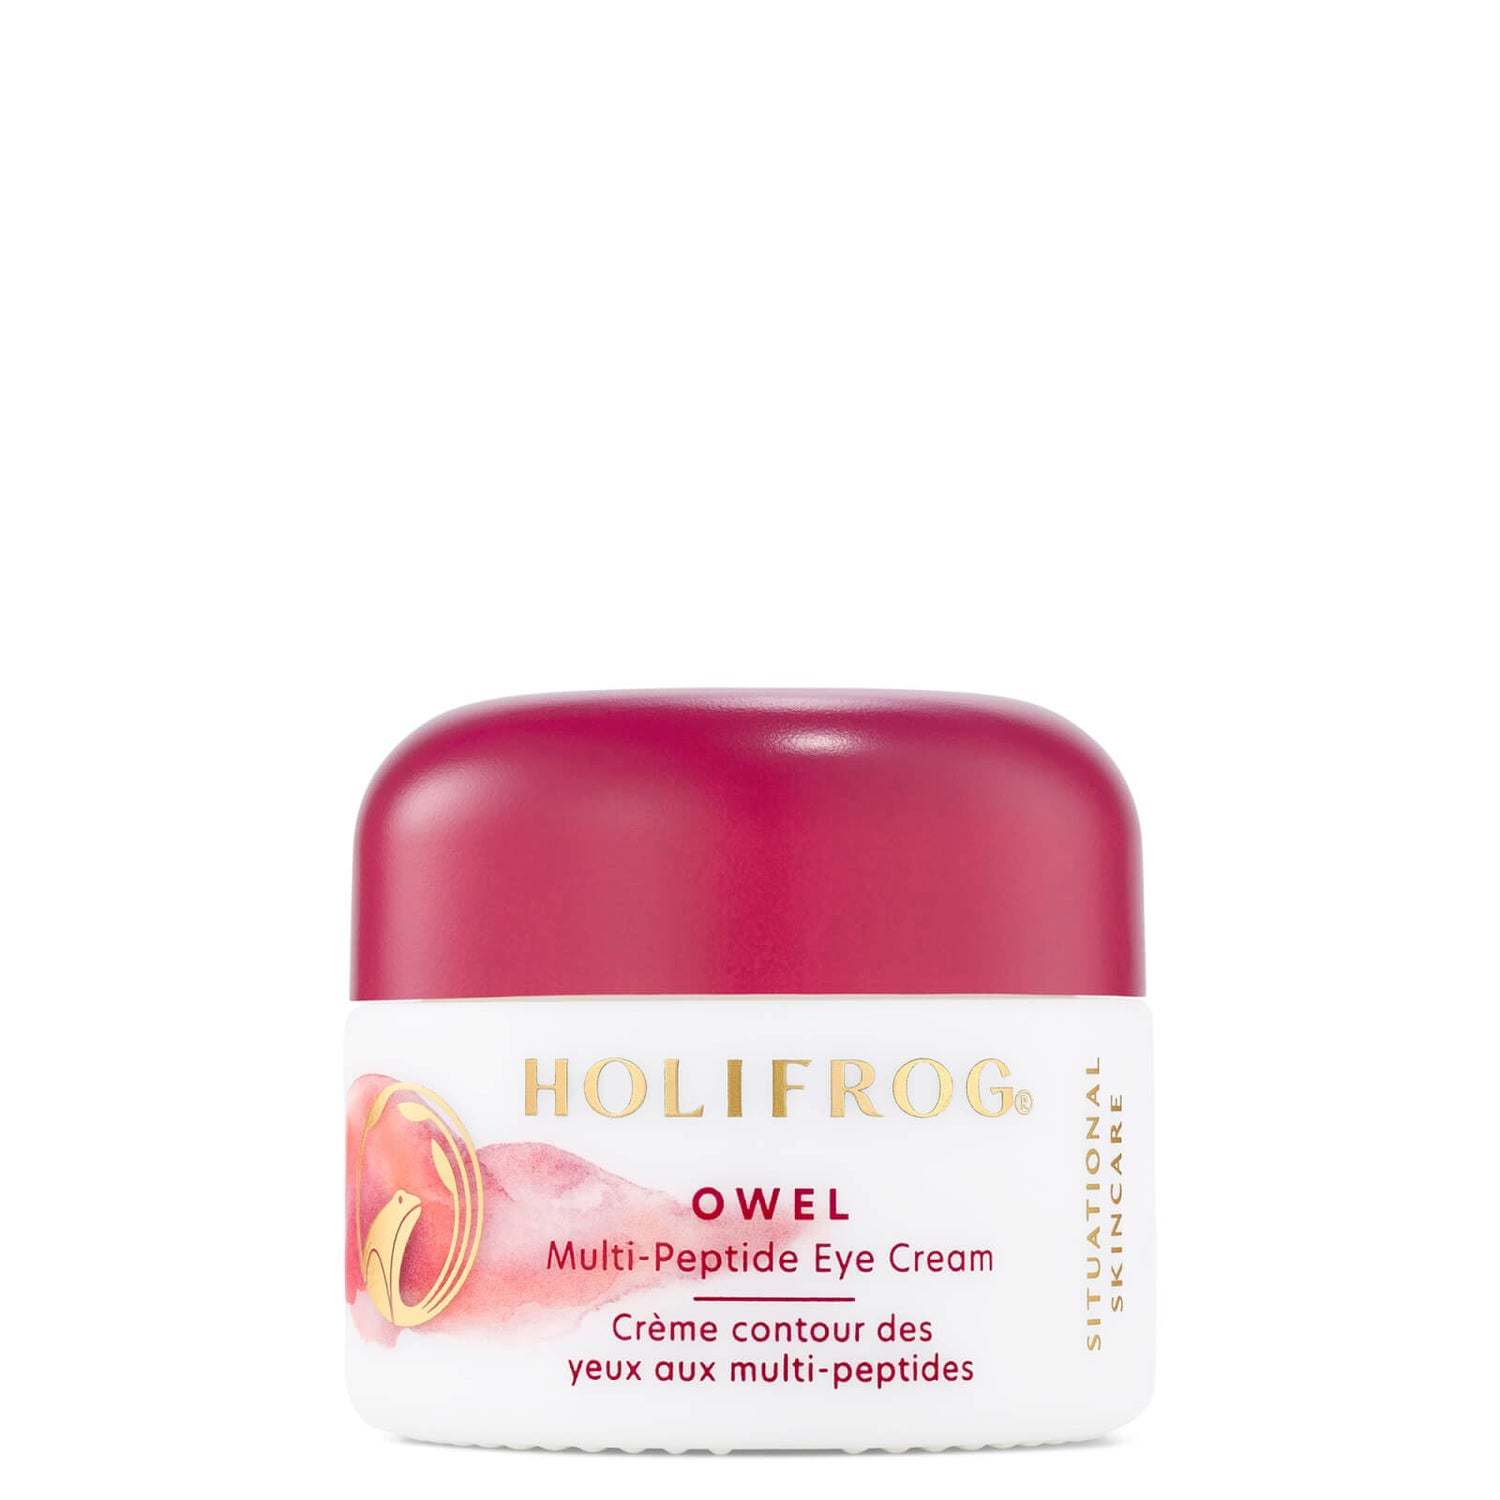 Holifrog Owel Multi-Peptide Eye Cream 0.5 fl. oz